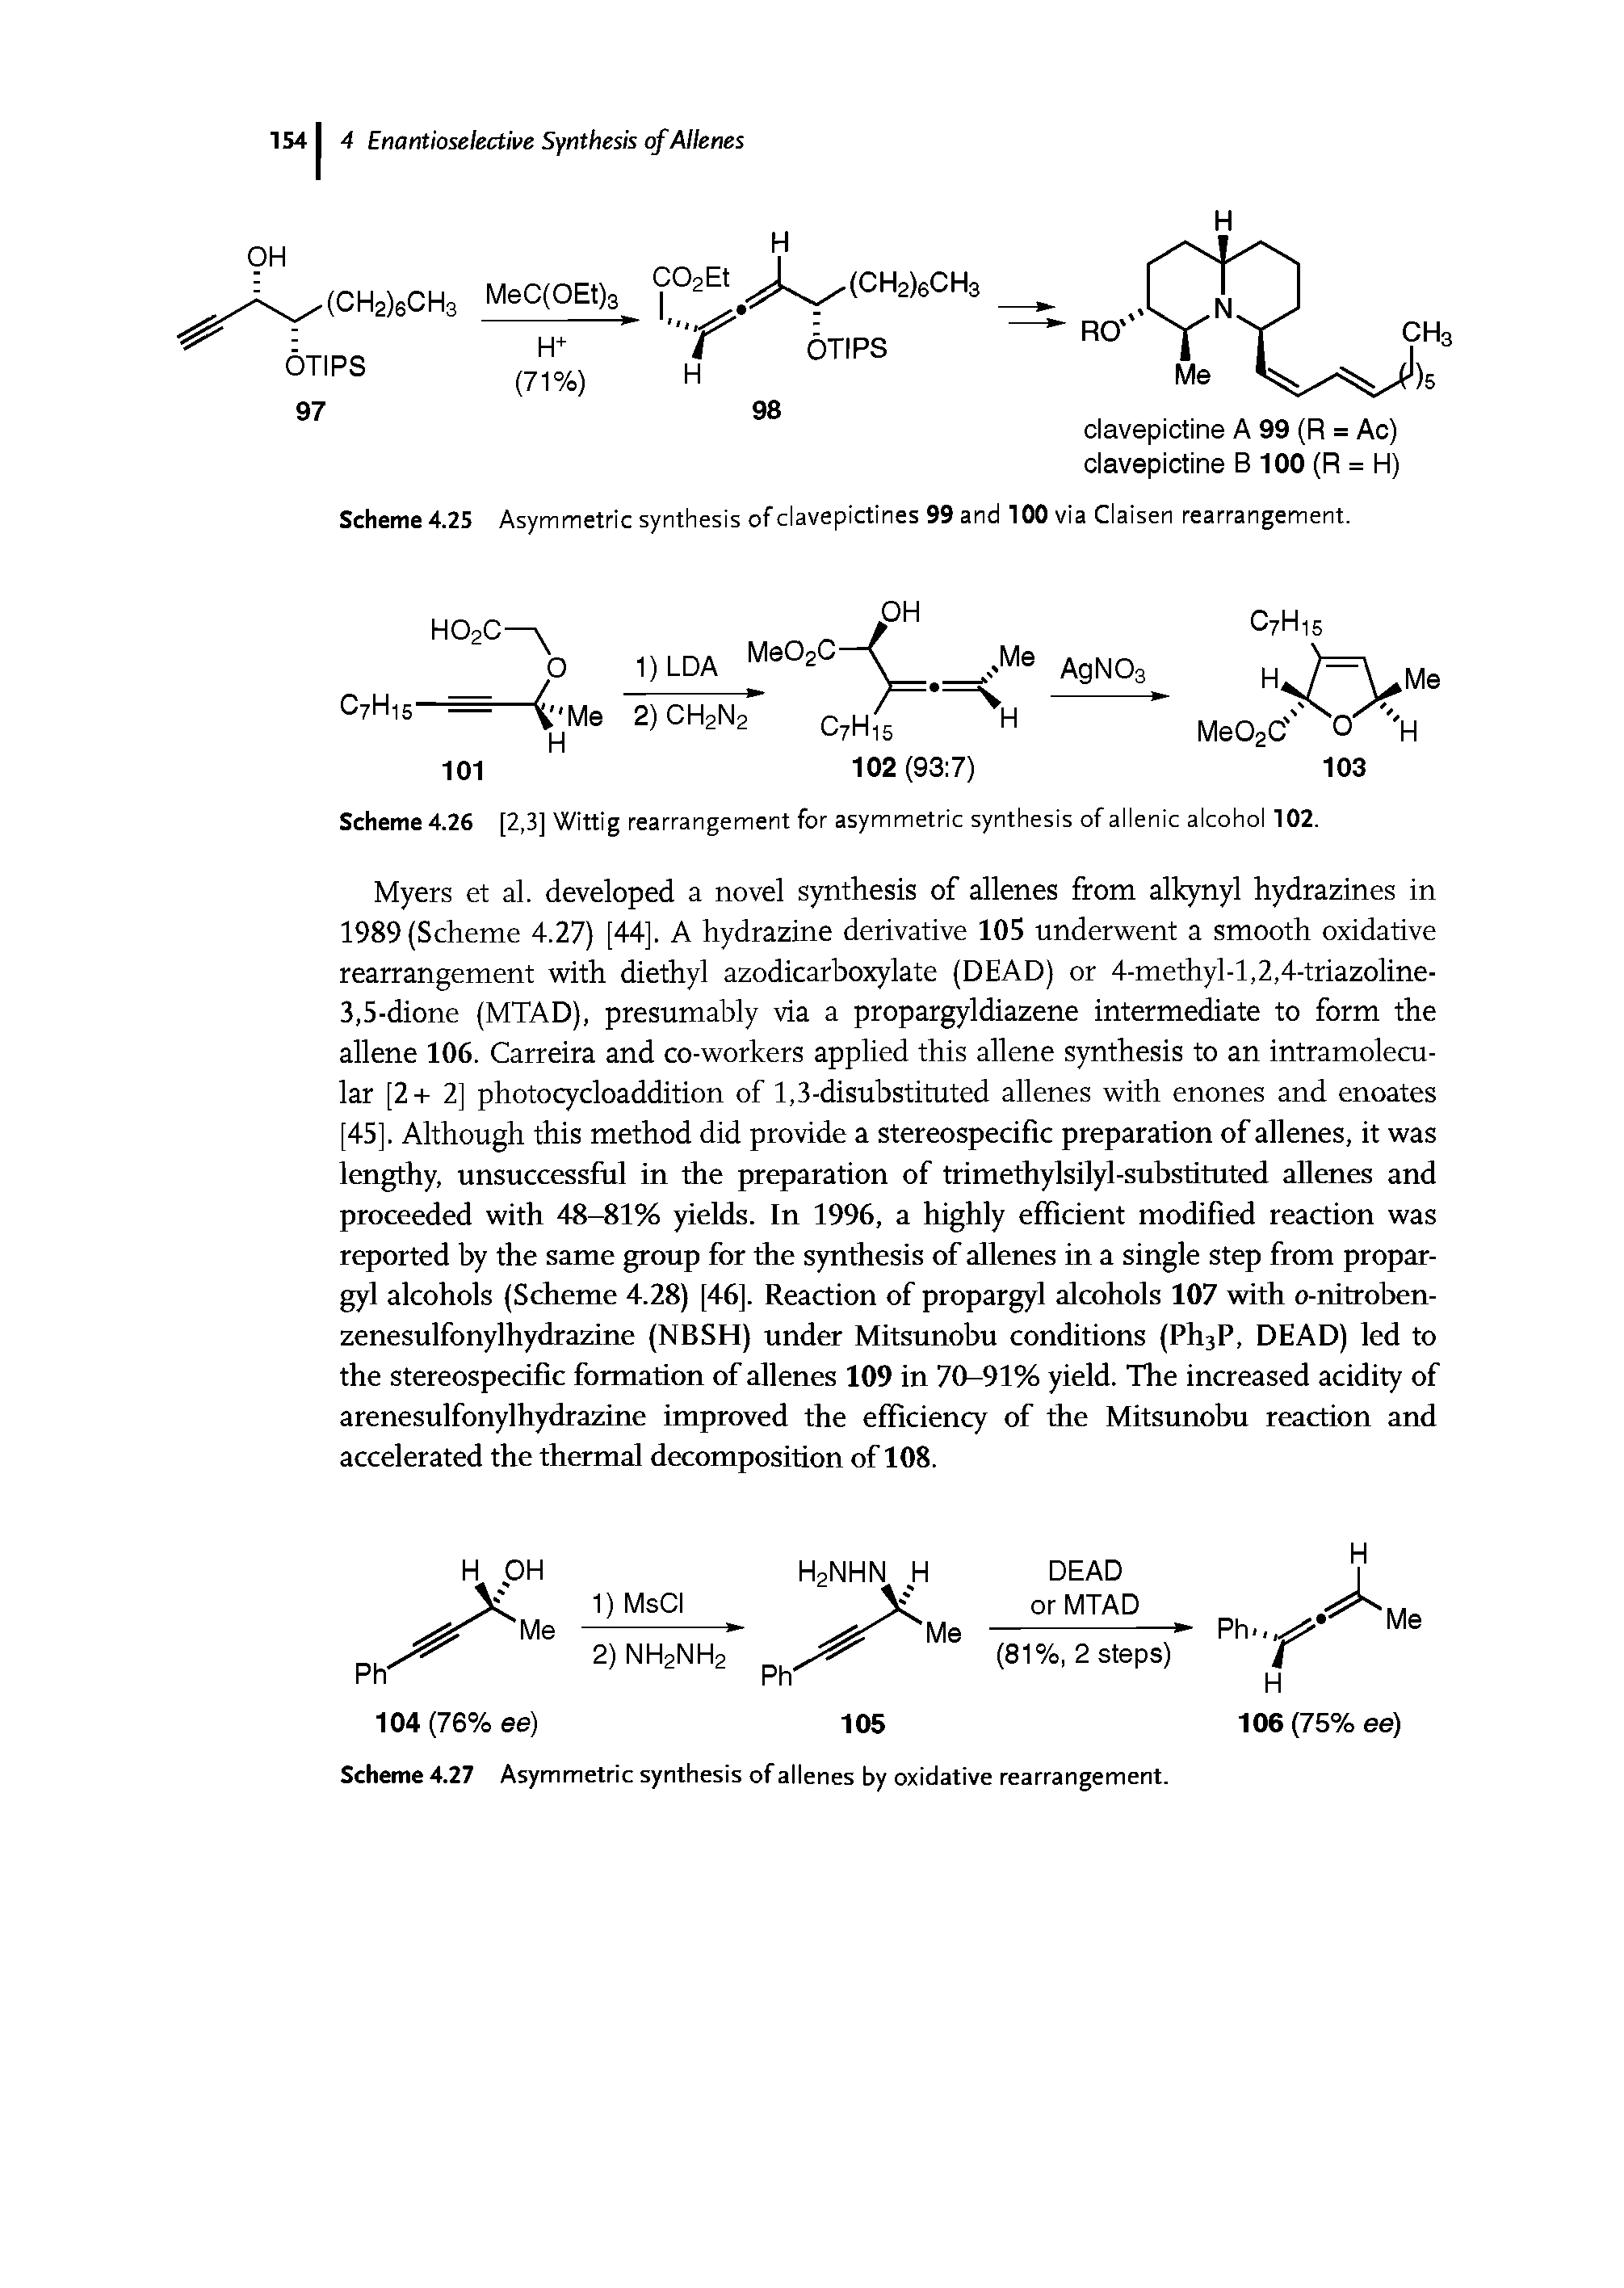 Scheme 4.27 Asymmetric synthesis of allenes by oxidative rearrangement.